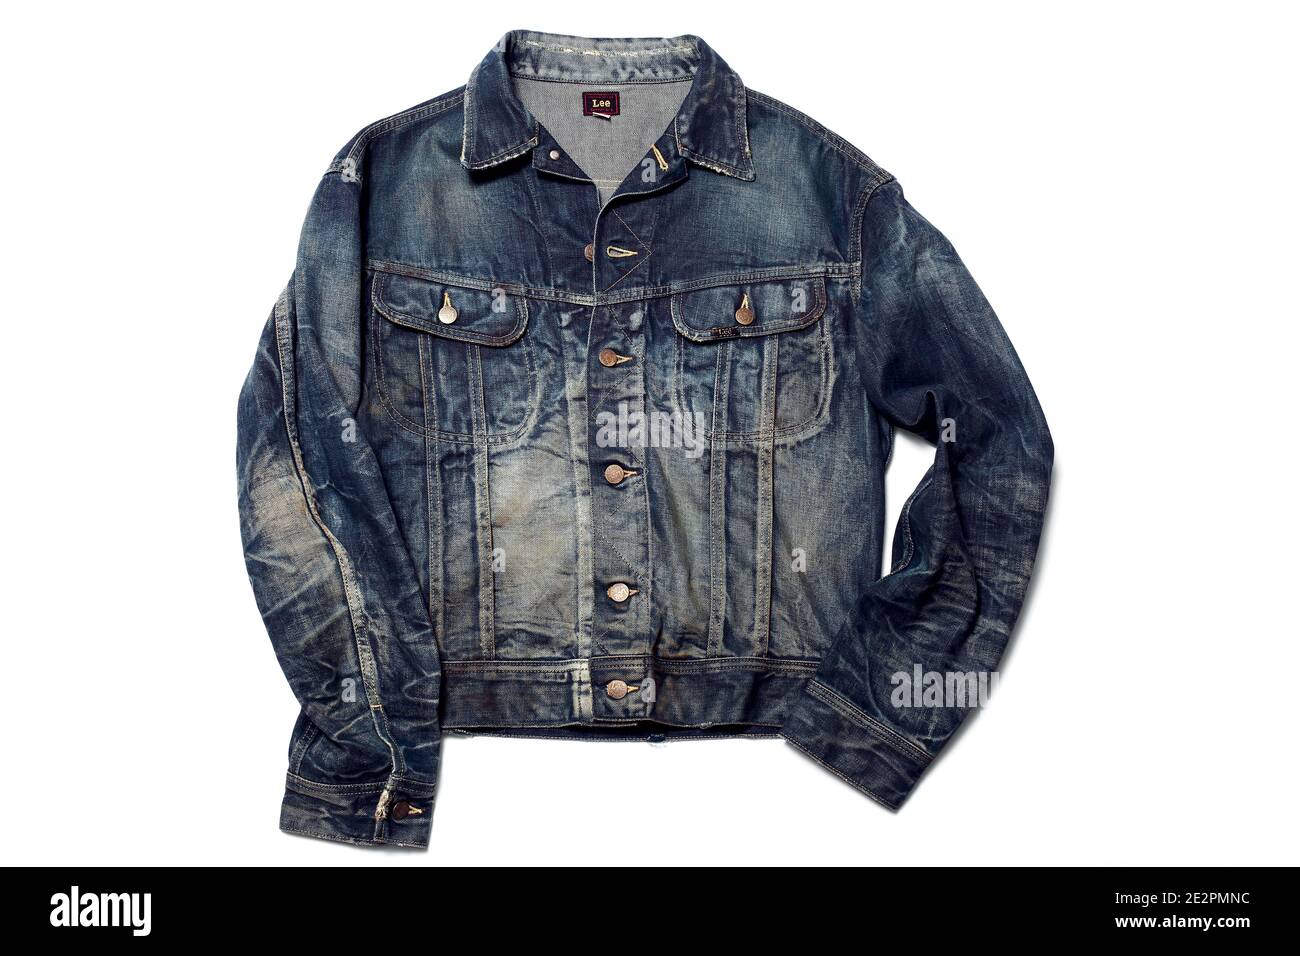 vintage denim jacket Lee jeans Stock Photo - Alamy